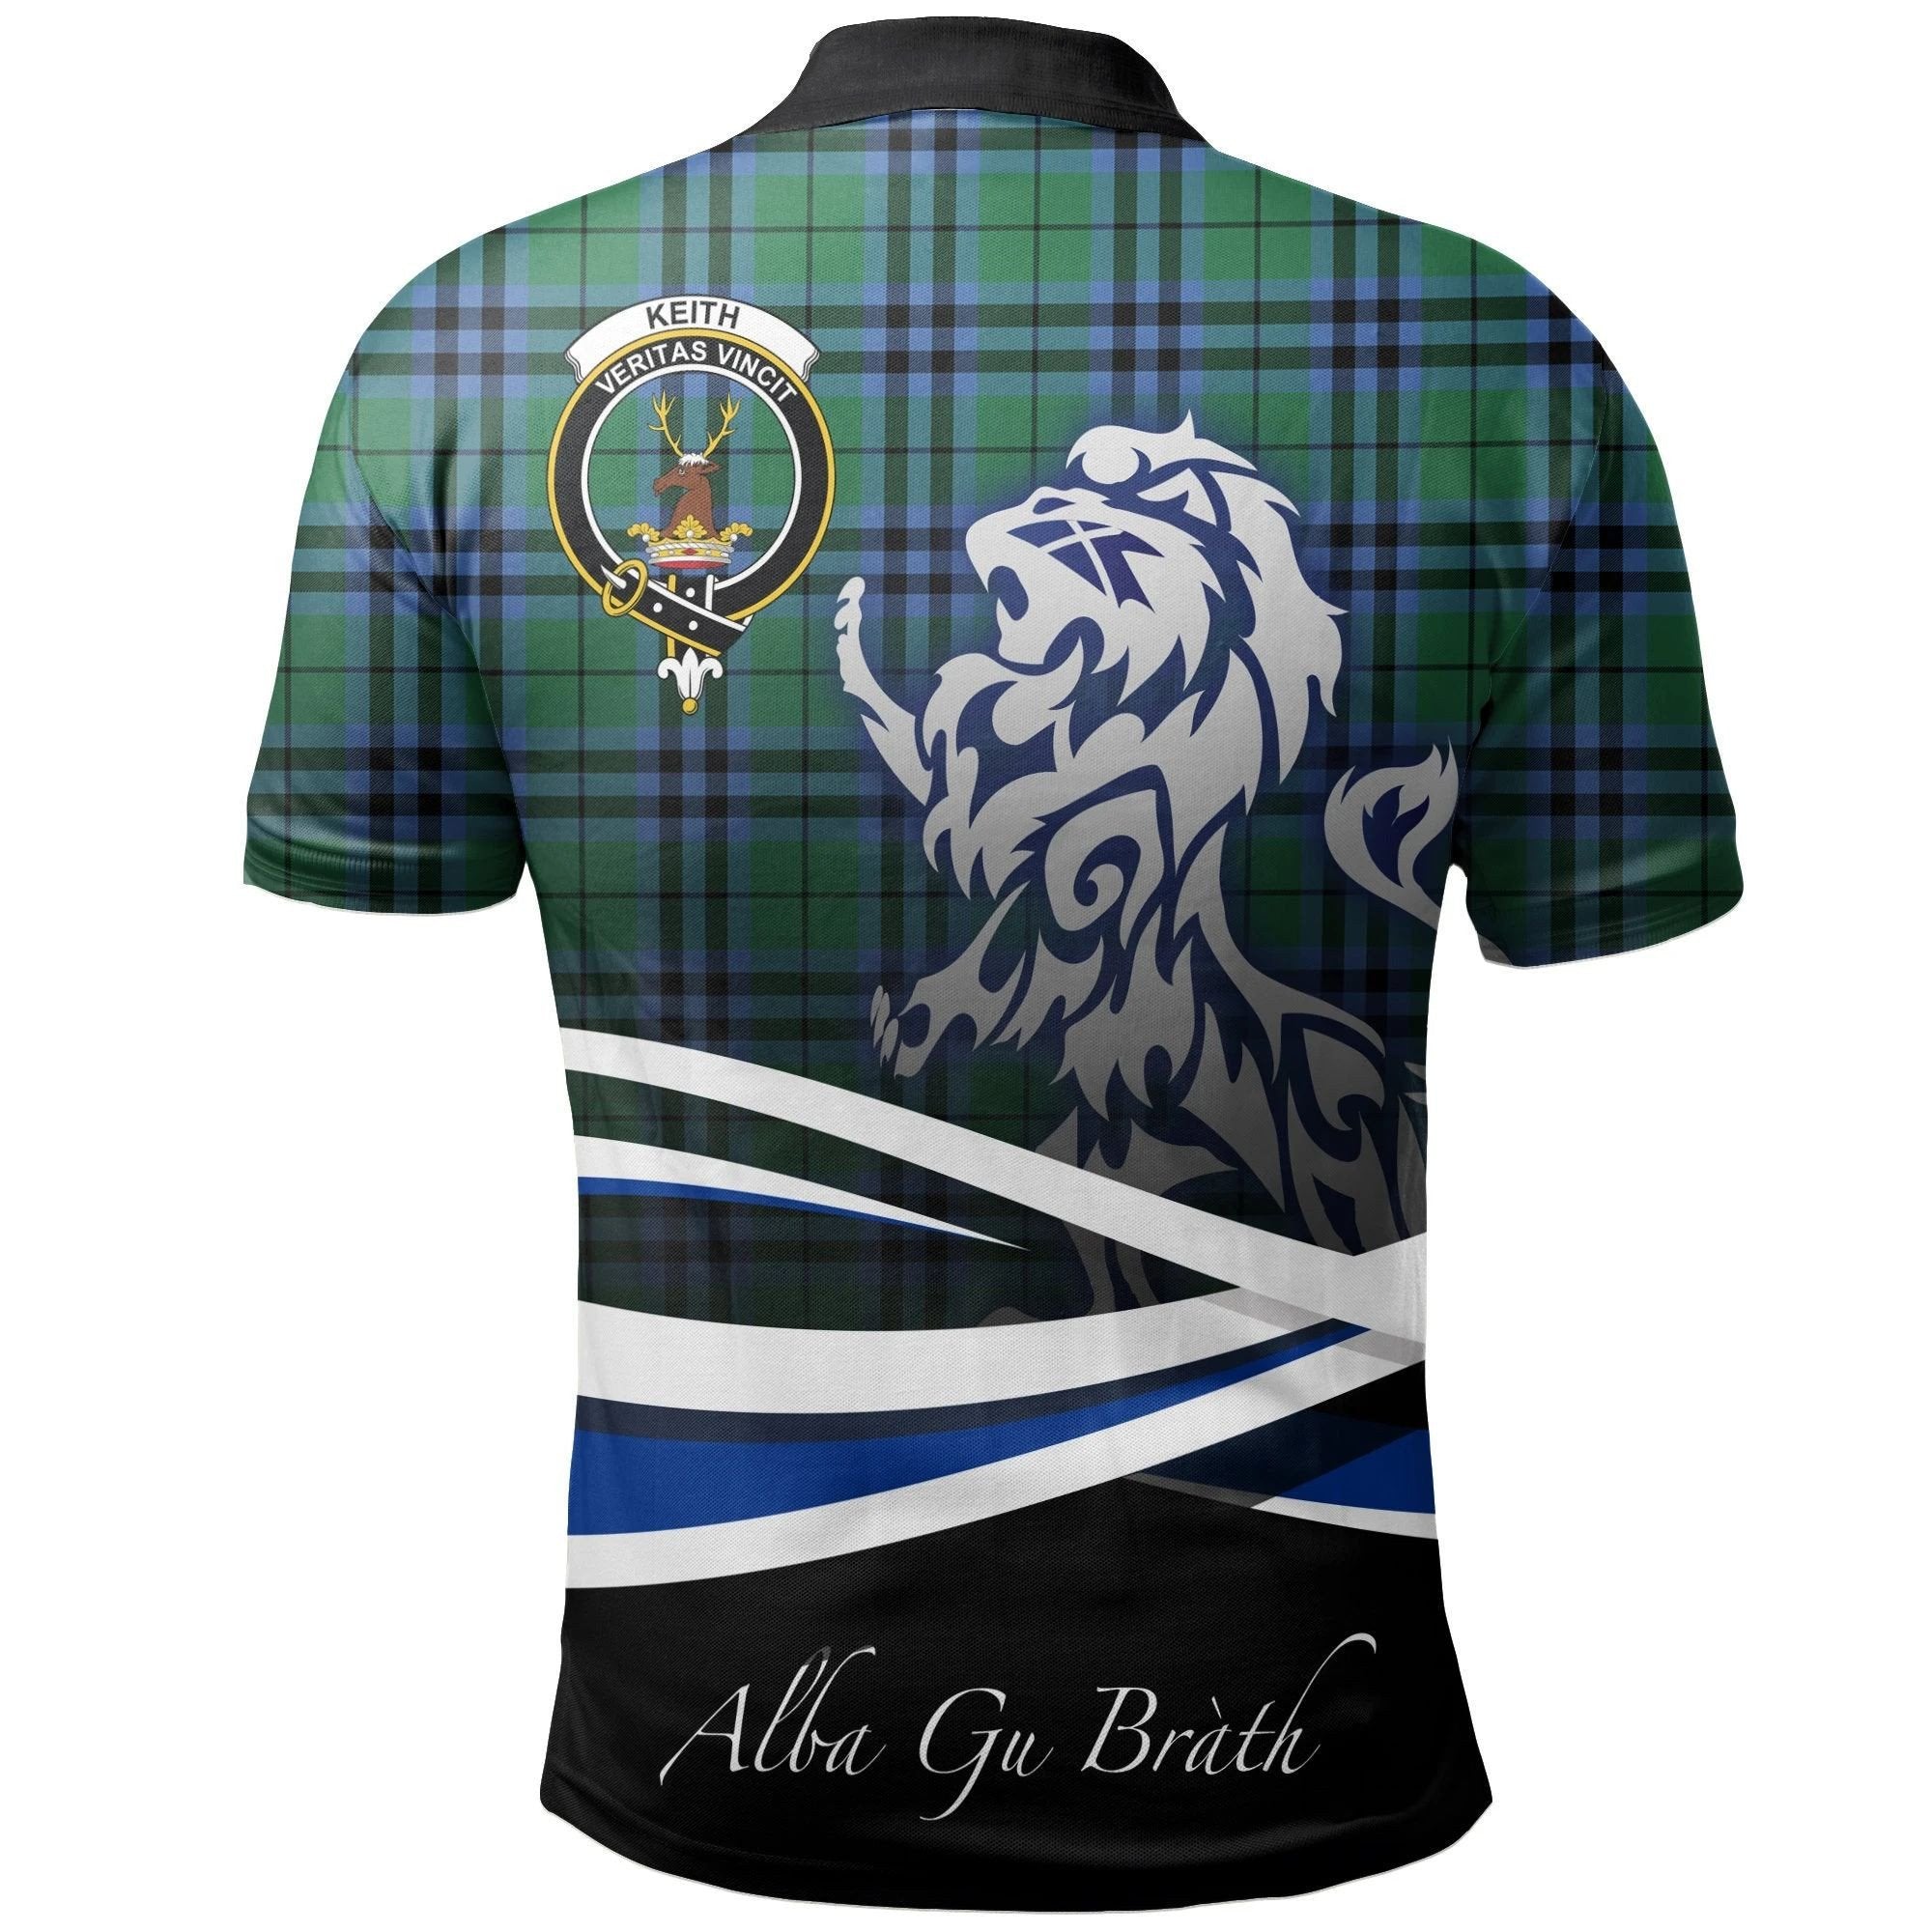 Keith Ancient Clan Polo Shirt, Scottish Tartan Keith Ancient Clans Polo Shirt Crest Lion Style